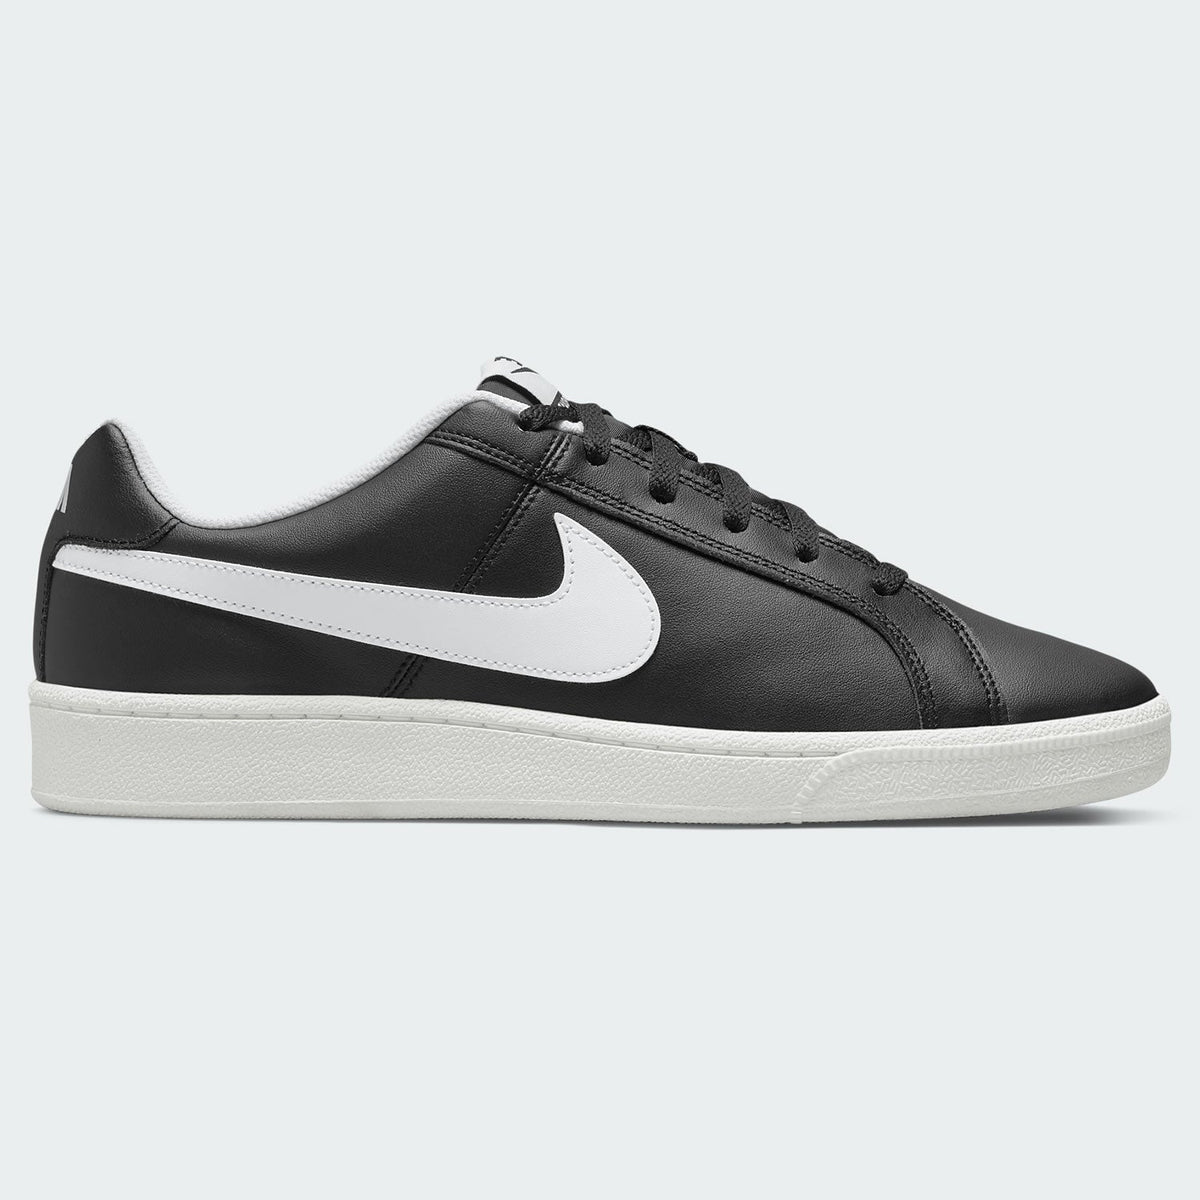 tradesports.co.uk Nike Court Royale Men's Shoes 749747 010 Black